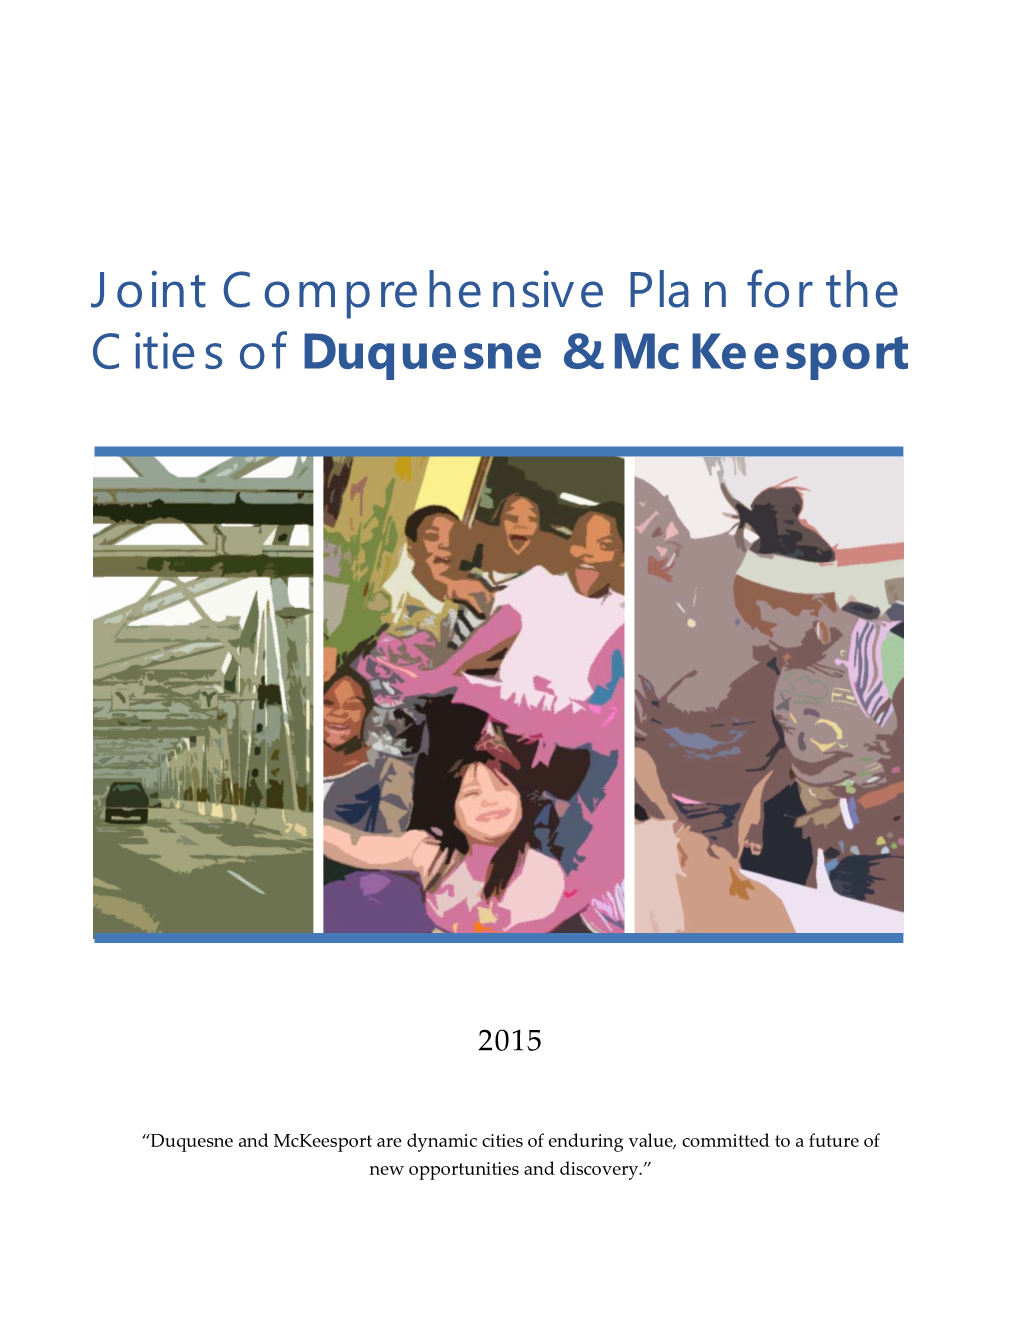 Duquesne Comprehensive Plan Map